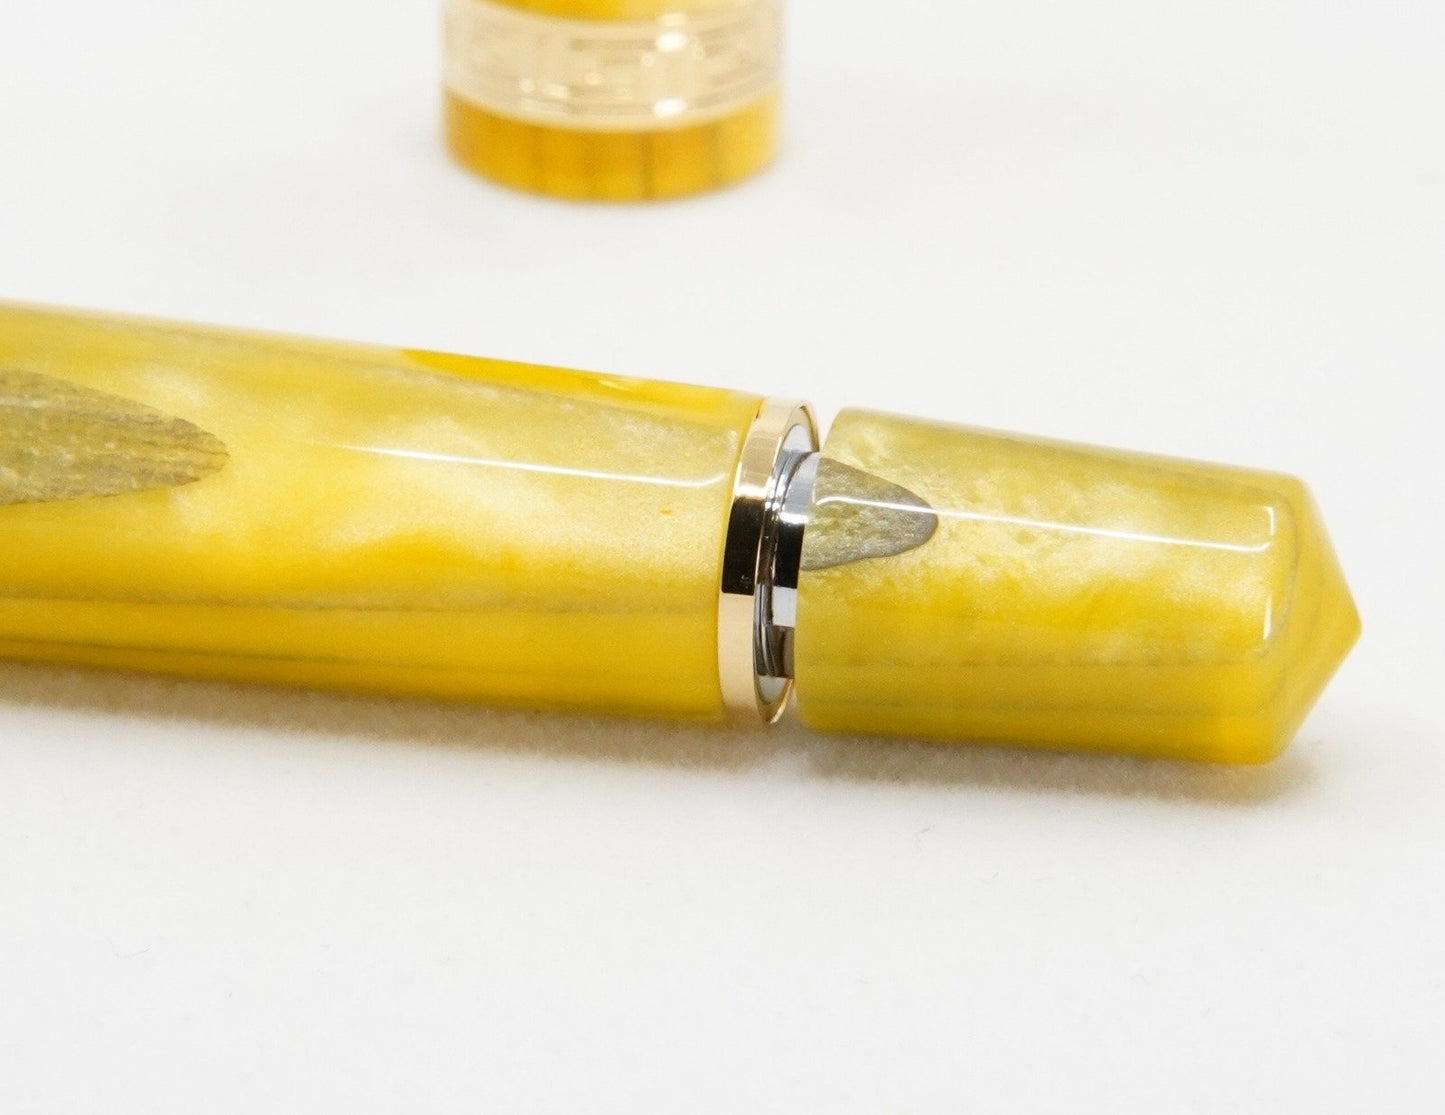 ASC Studio Pinnacle Yellow with Gold Trim Fountain Pen